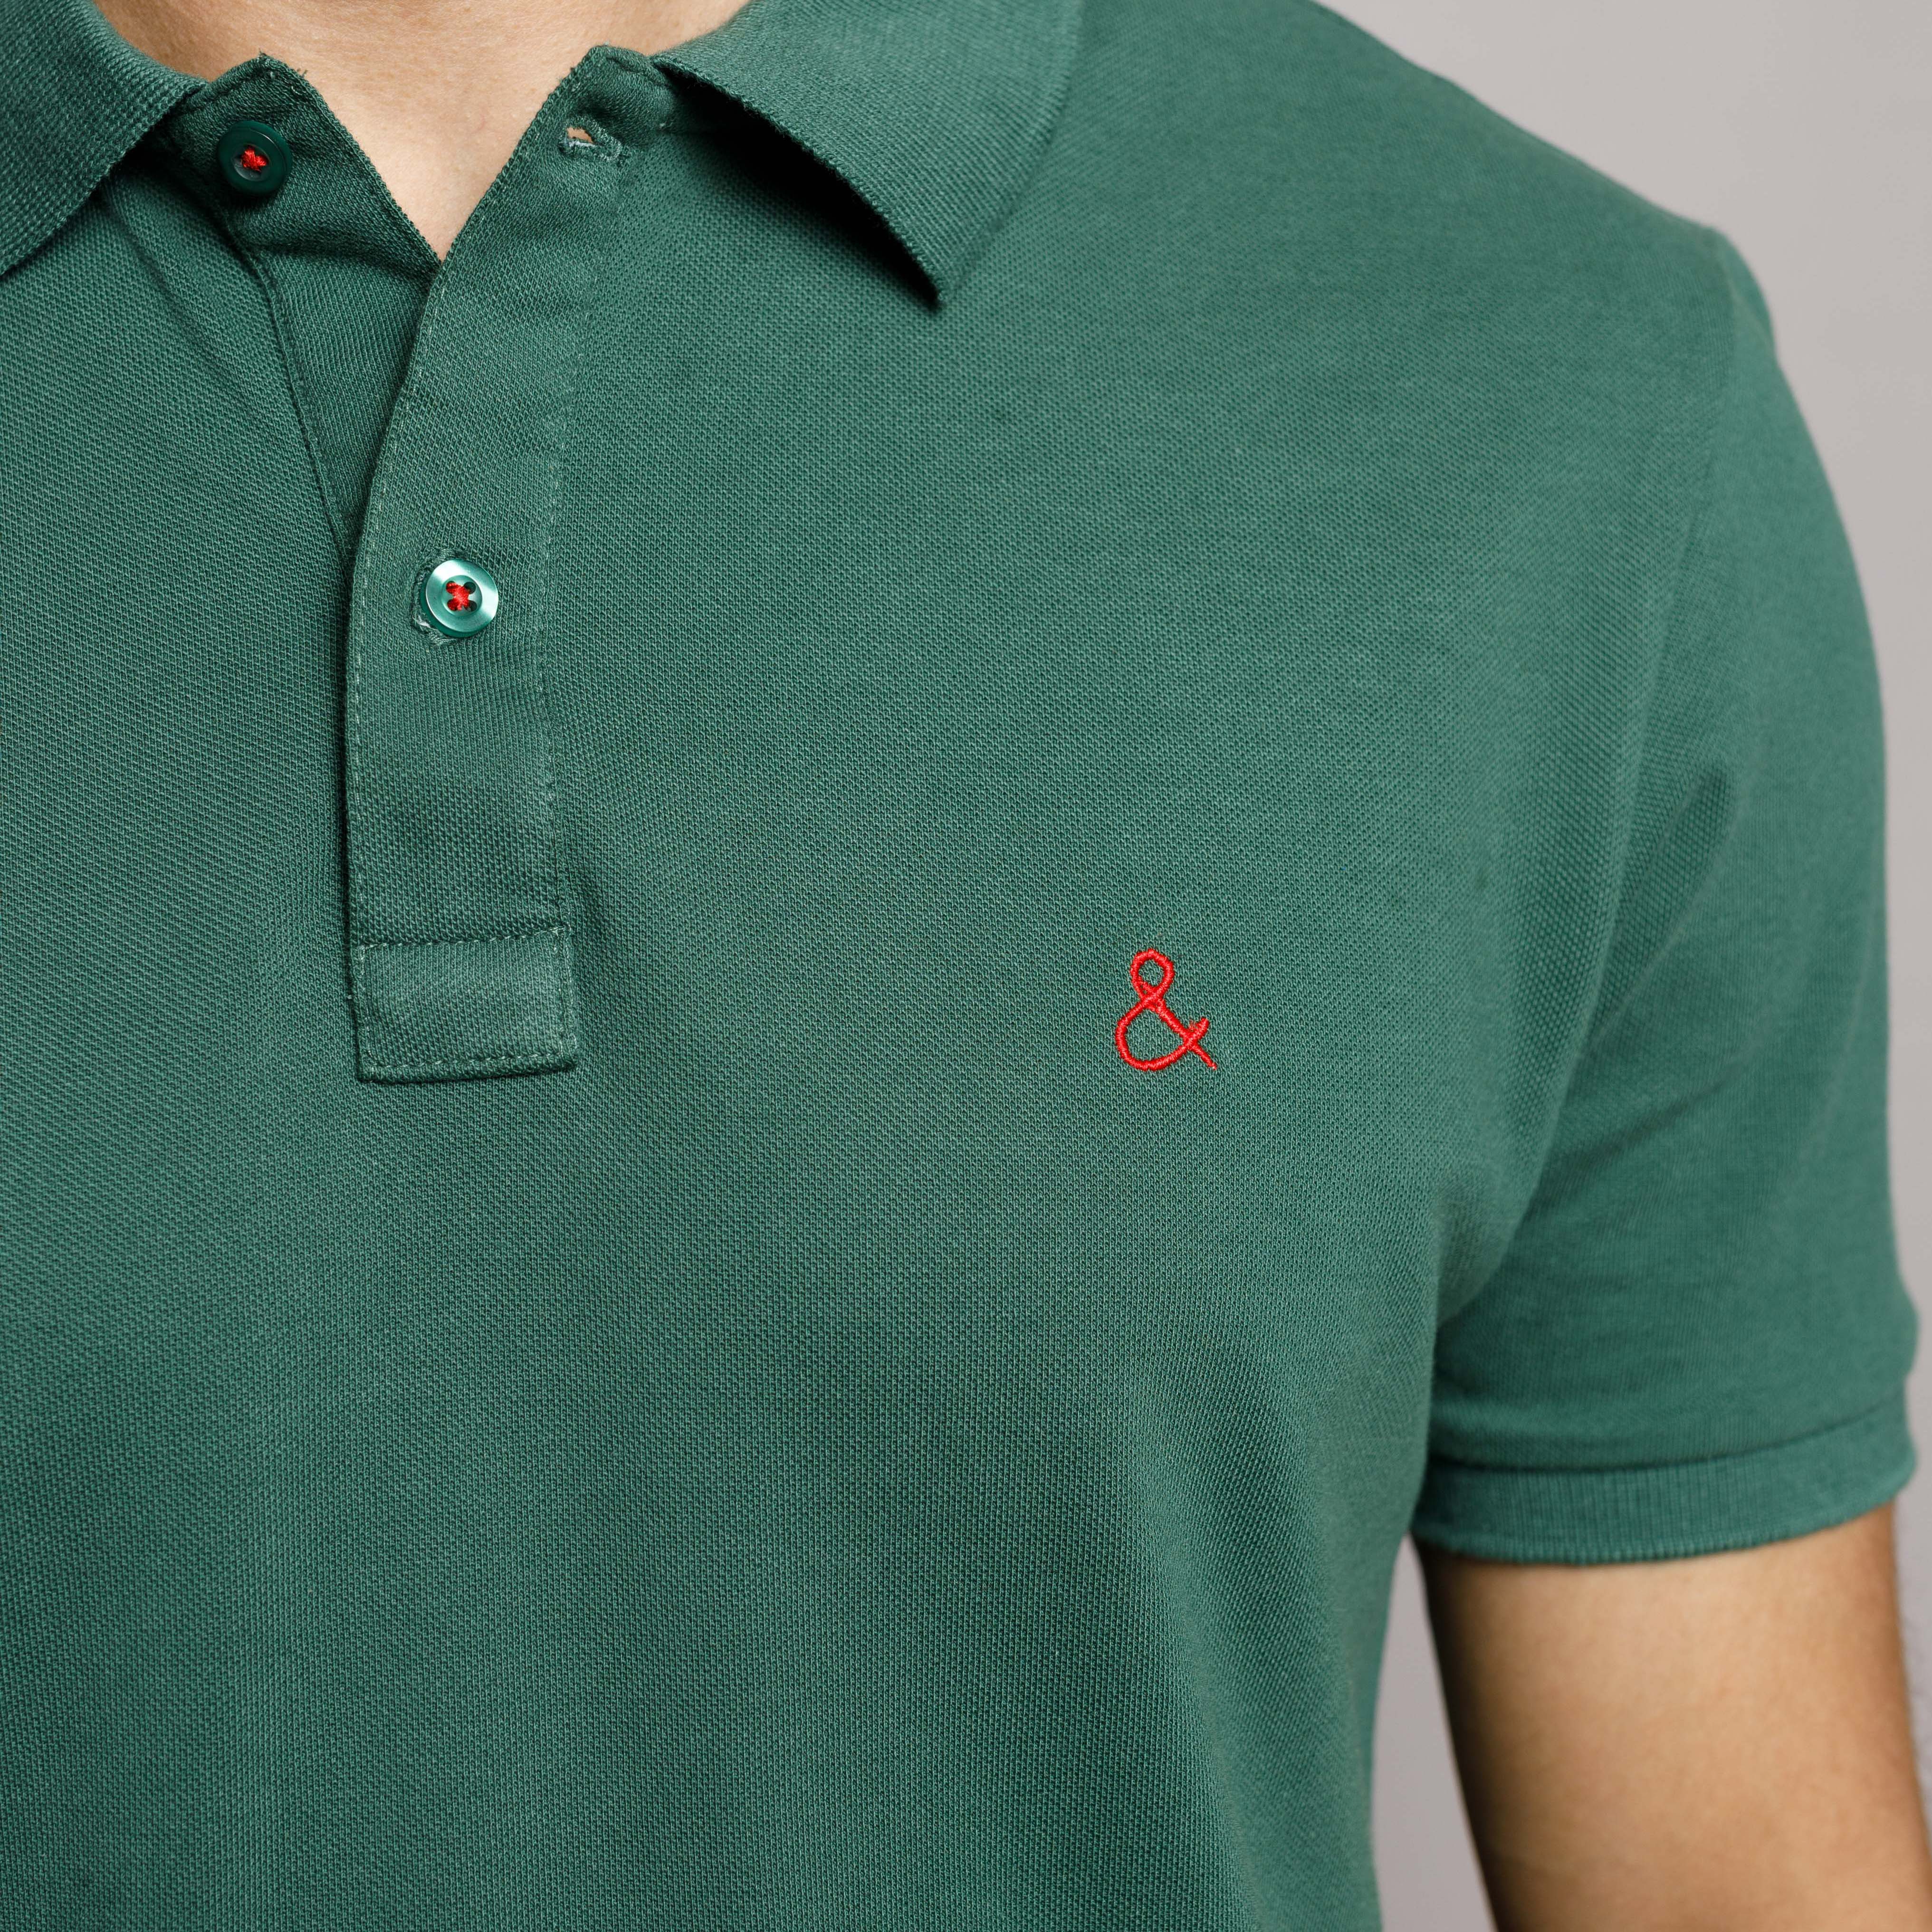 Pine Green Polo T-Shirt